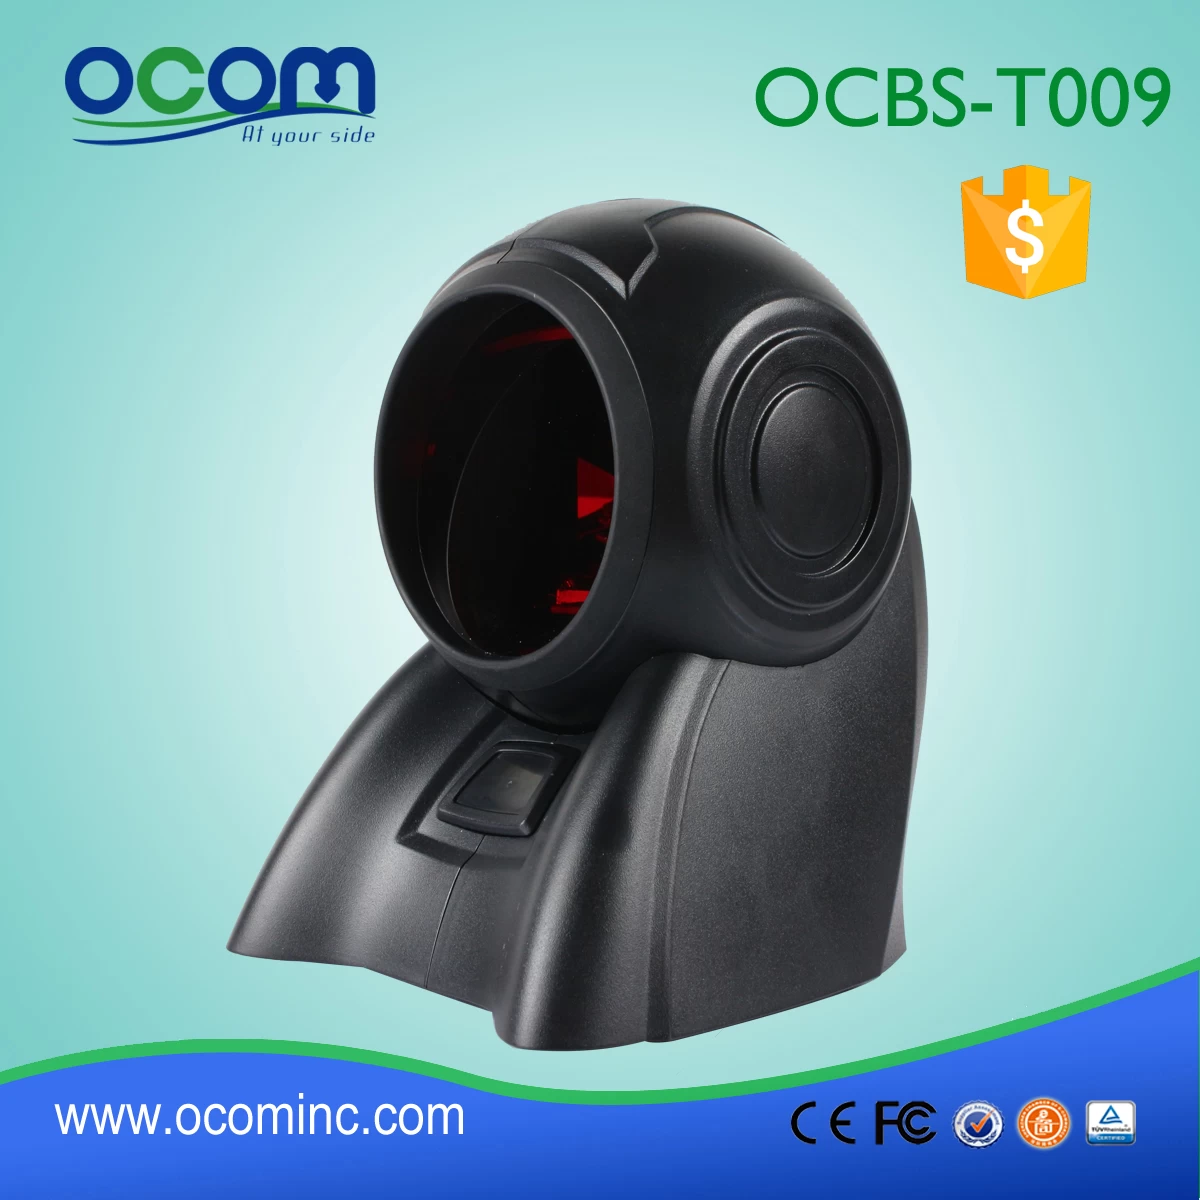 china Omni barcode scanner price,Omni barcode scanner machine